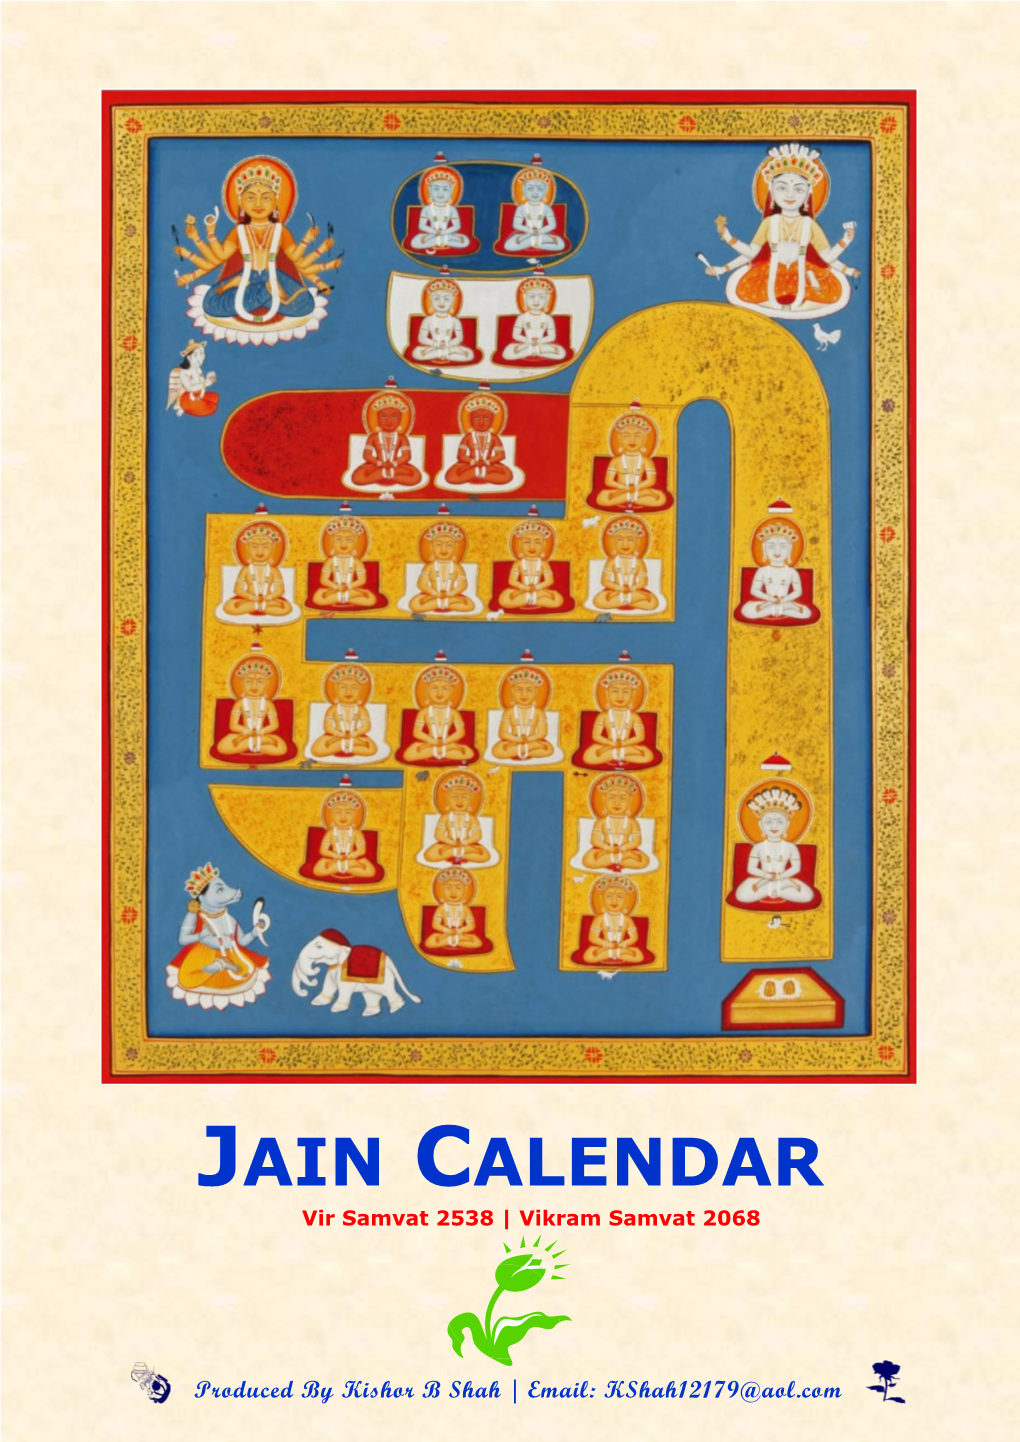 Jain Calendar 2011 – 2012 in English